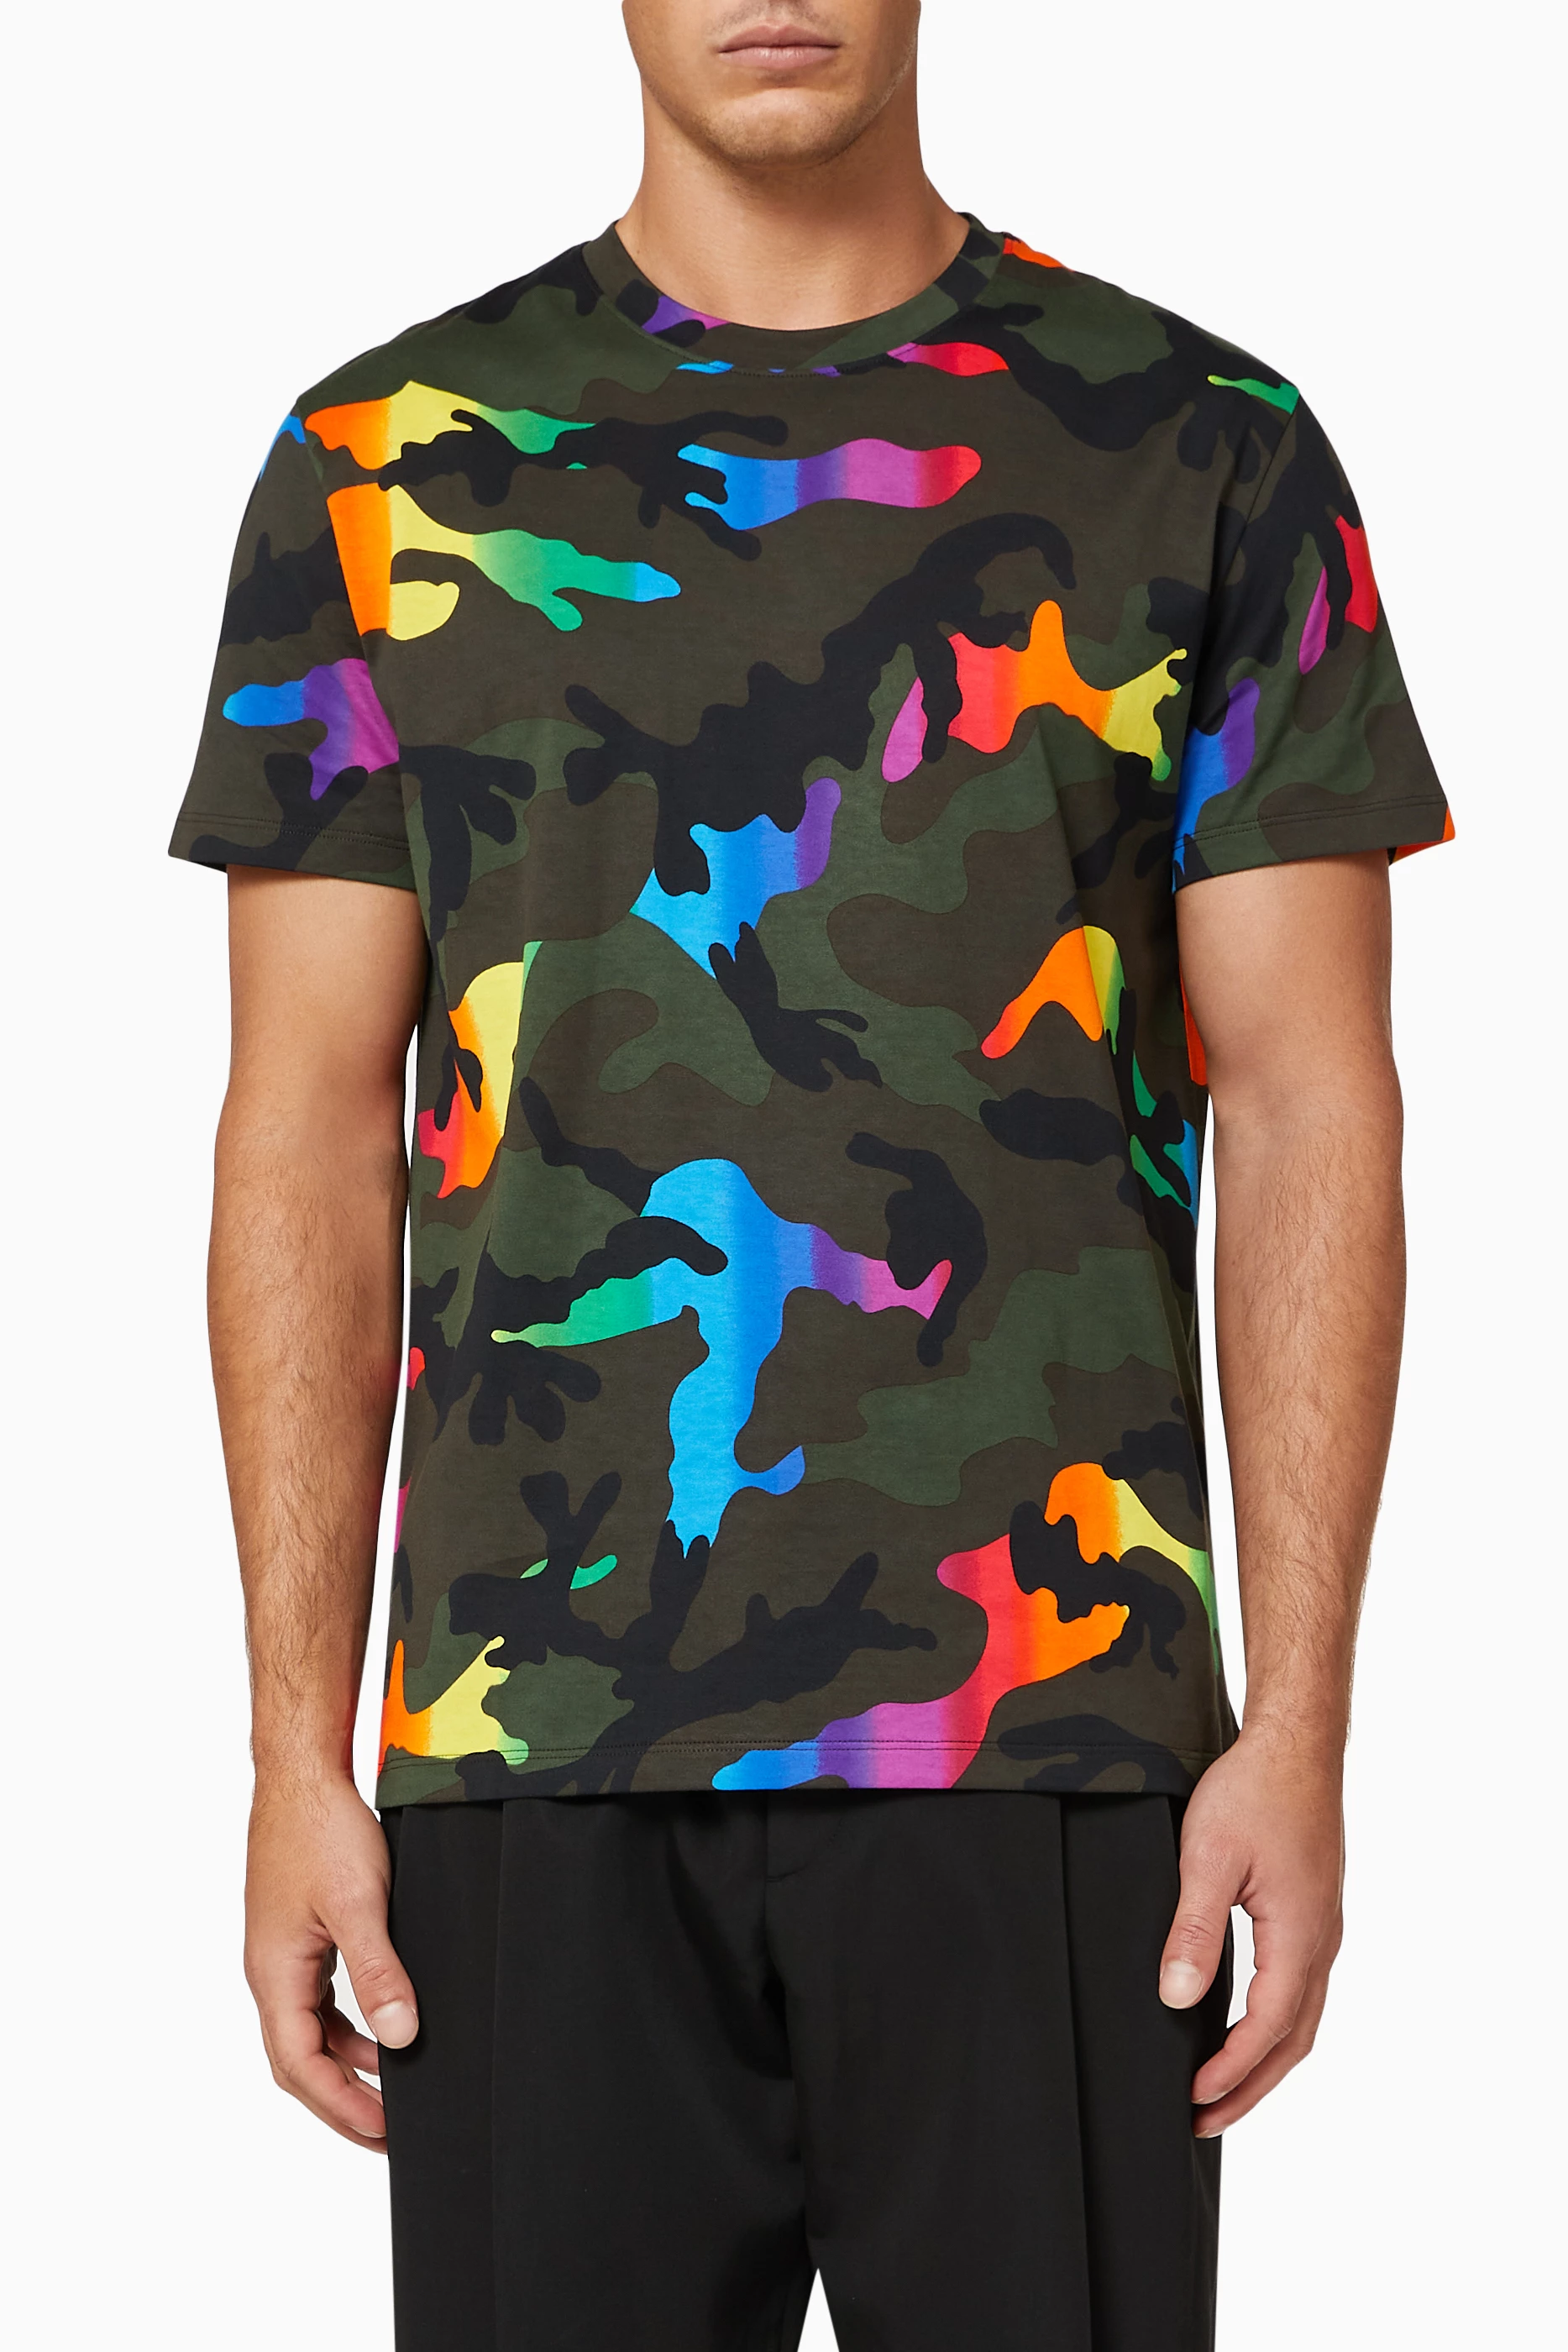 Garavani Multicolour Camouflage Cotton T-shirt for MEN in Ounass